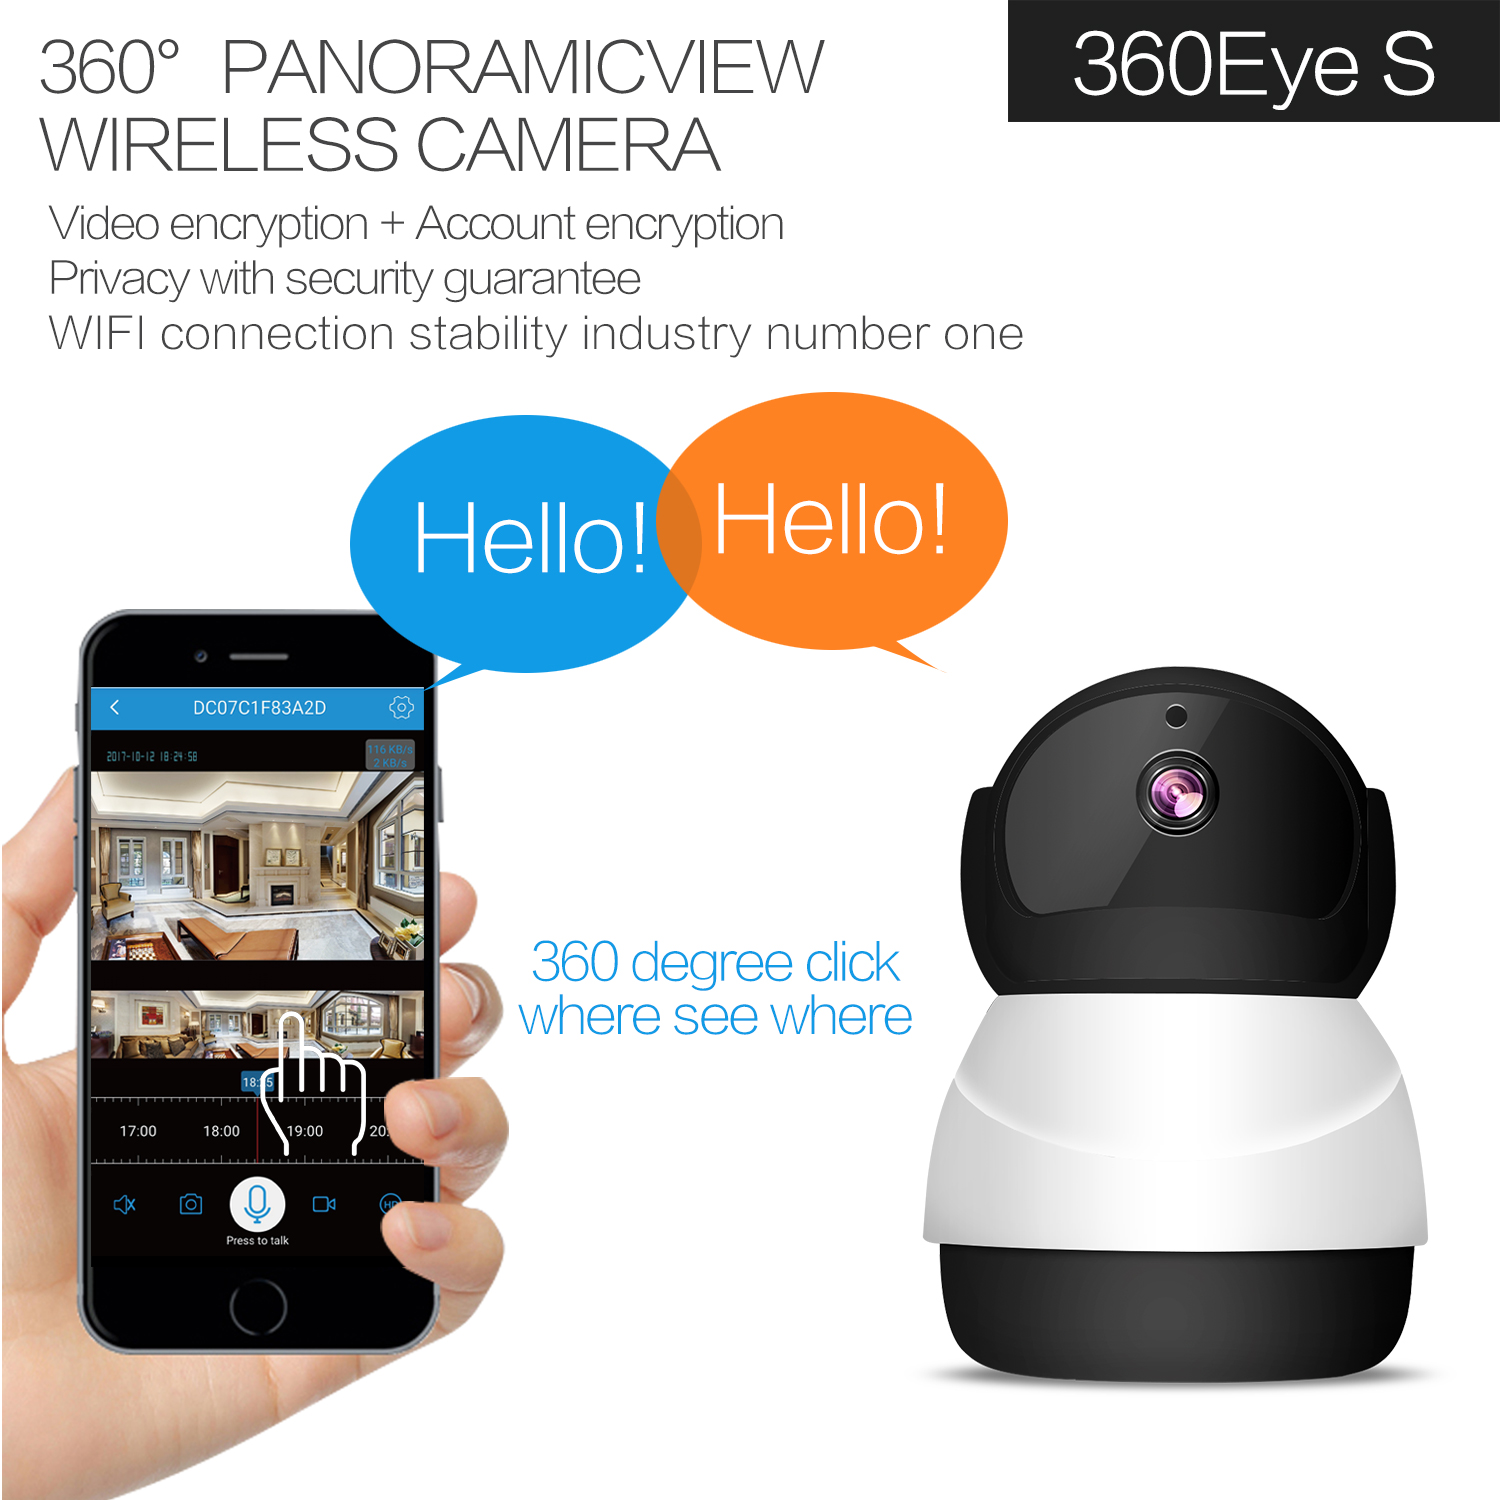 360eyes HD Snowman Wireless wifi network surveillance camera